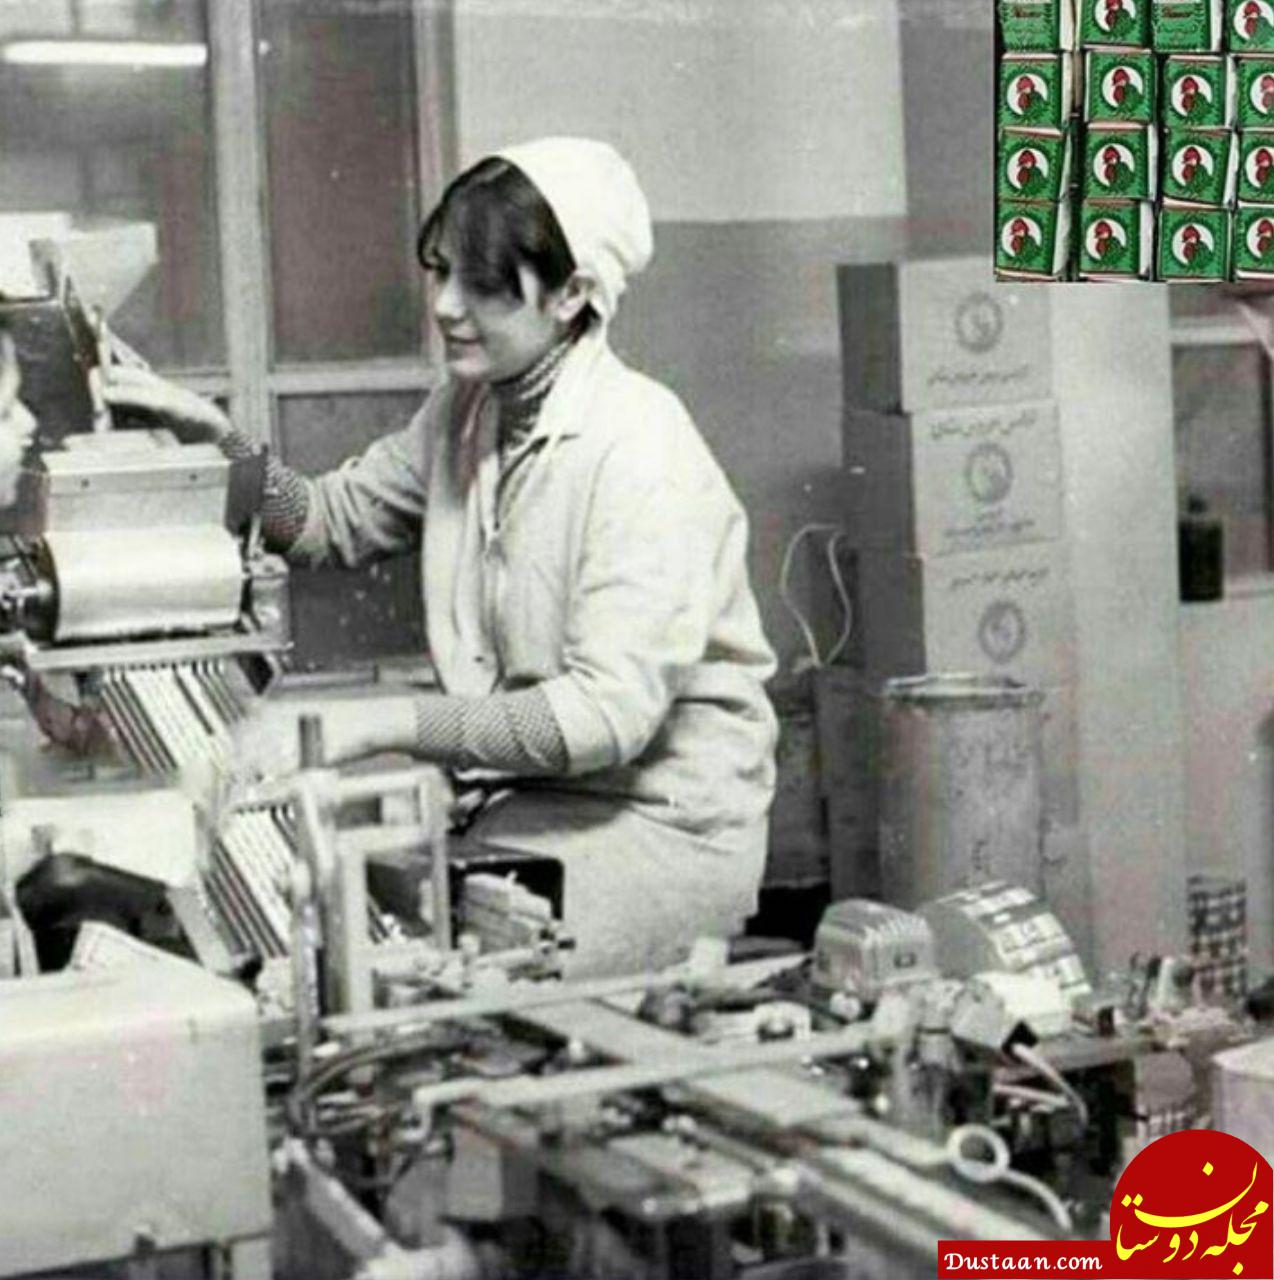 www.dustaan.com-کارخانه آدامس خروس در دهه ۵۰ +عکس